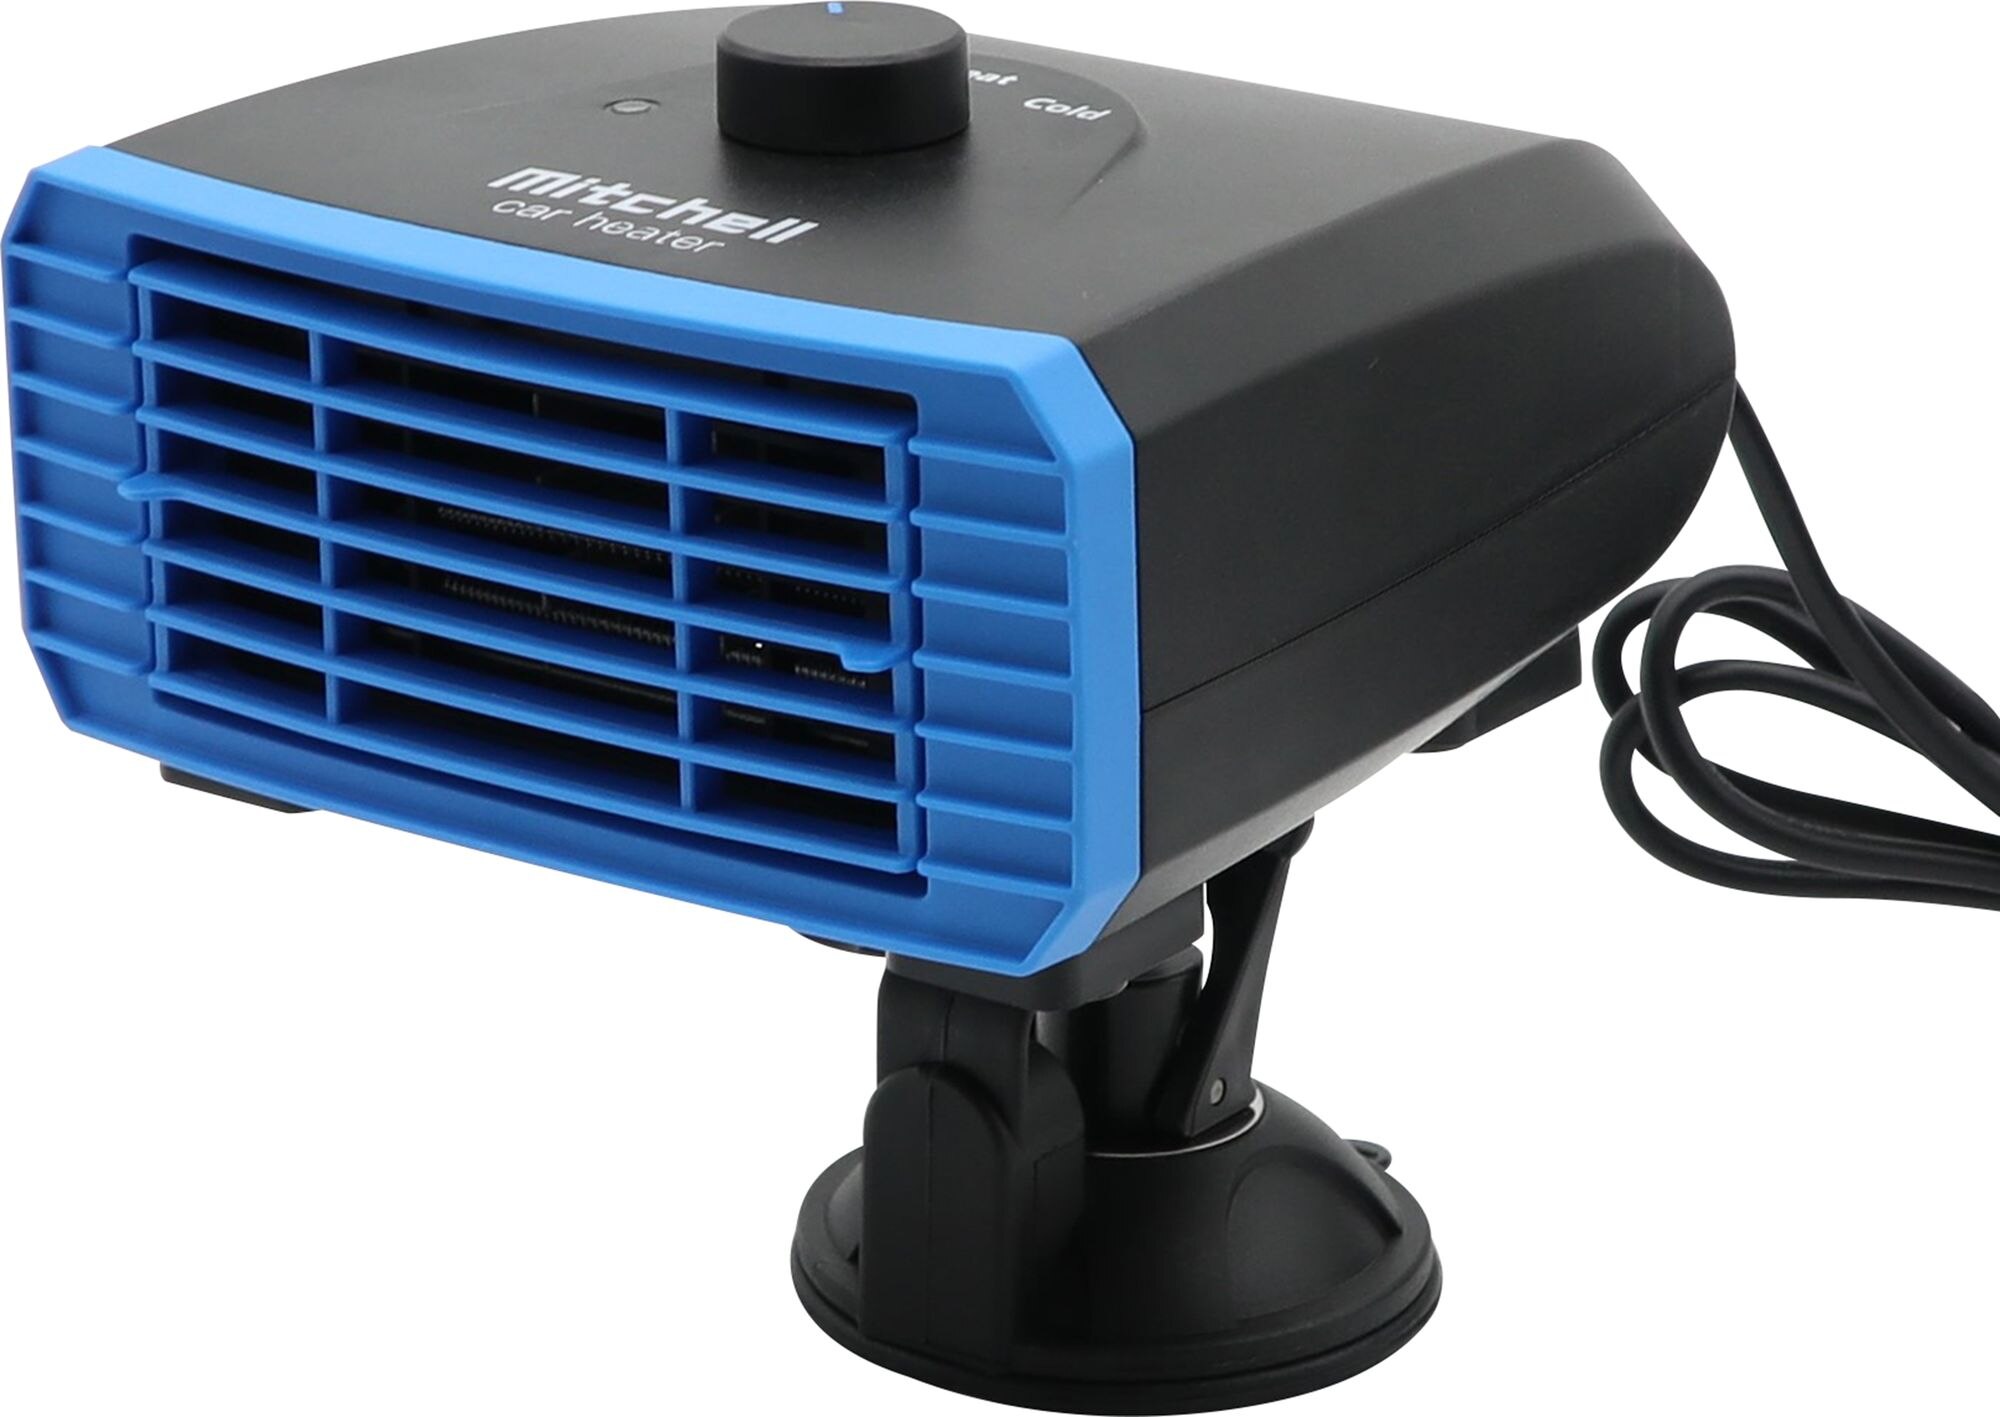 1x Car Fan Heater 12V Ceramic Heating Cooling Dry Heater Fan Defroster Demister 1pcs Car Auto Heater Fan 12V Cooler Dryer Demister Defroster 2 in 1 Universal US 